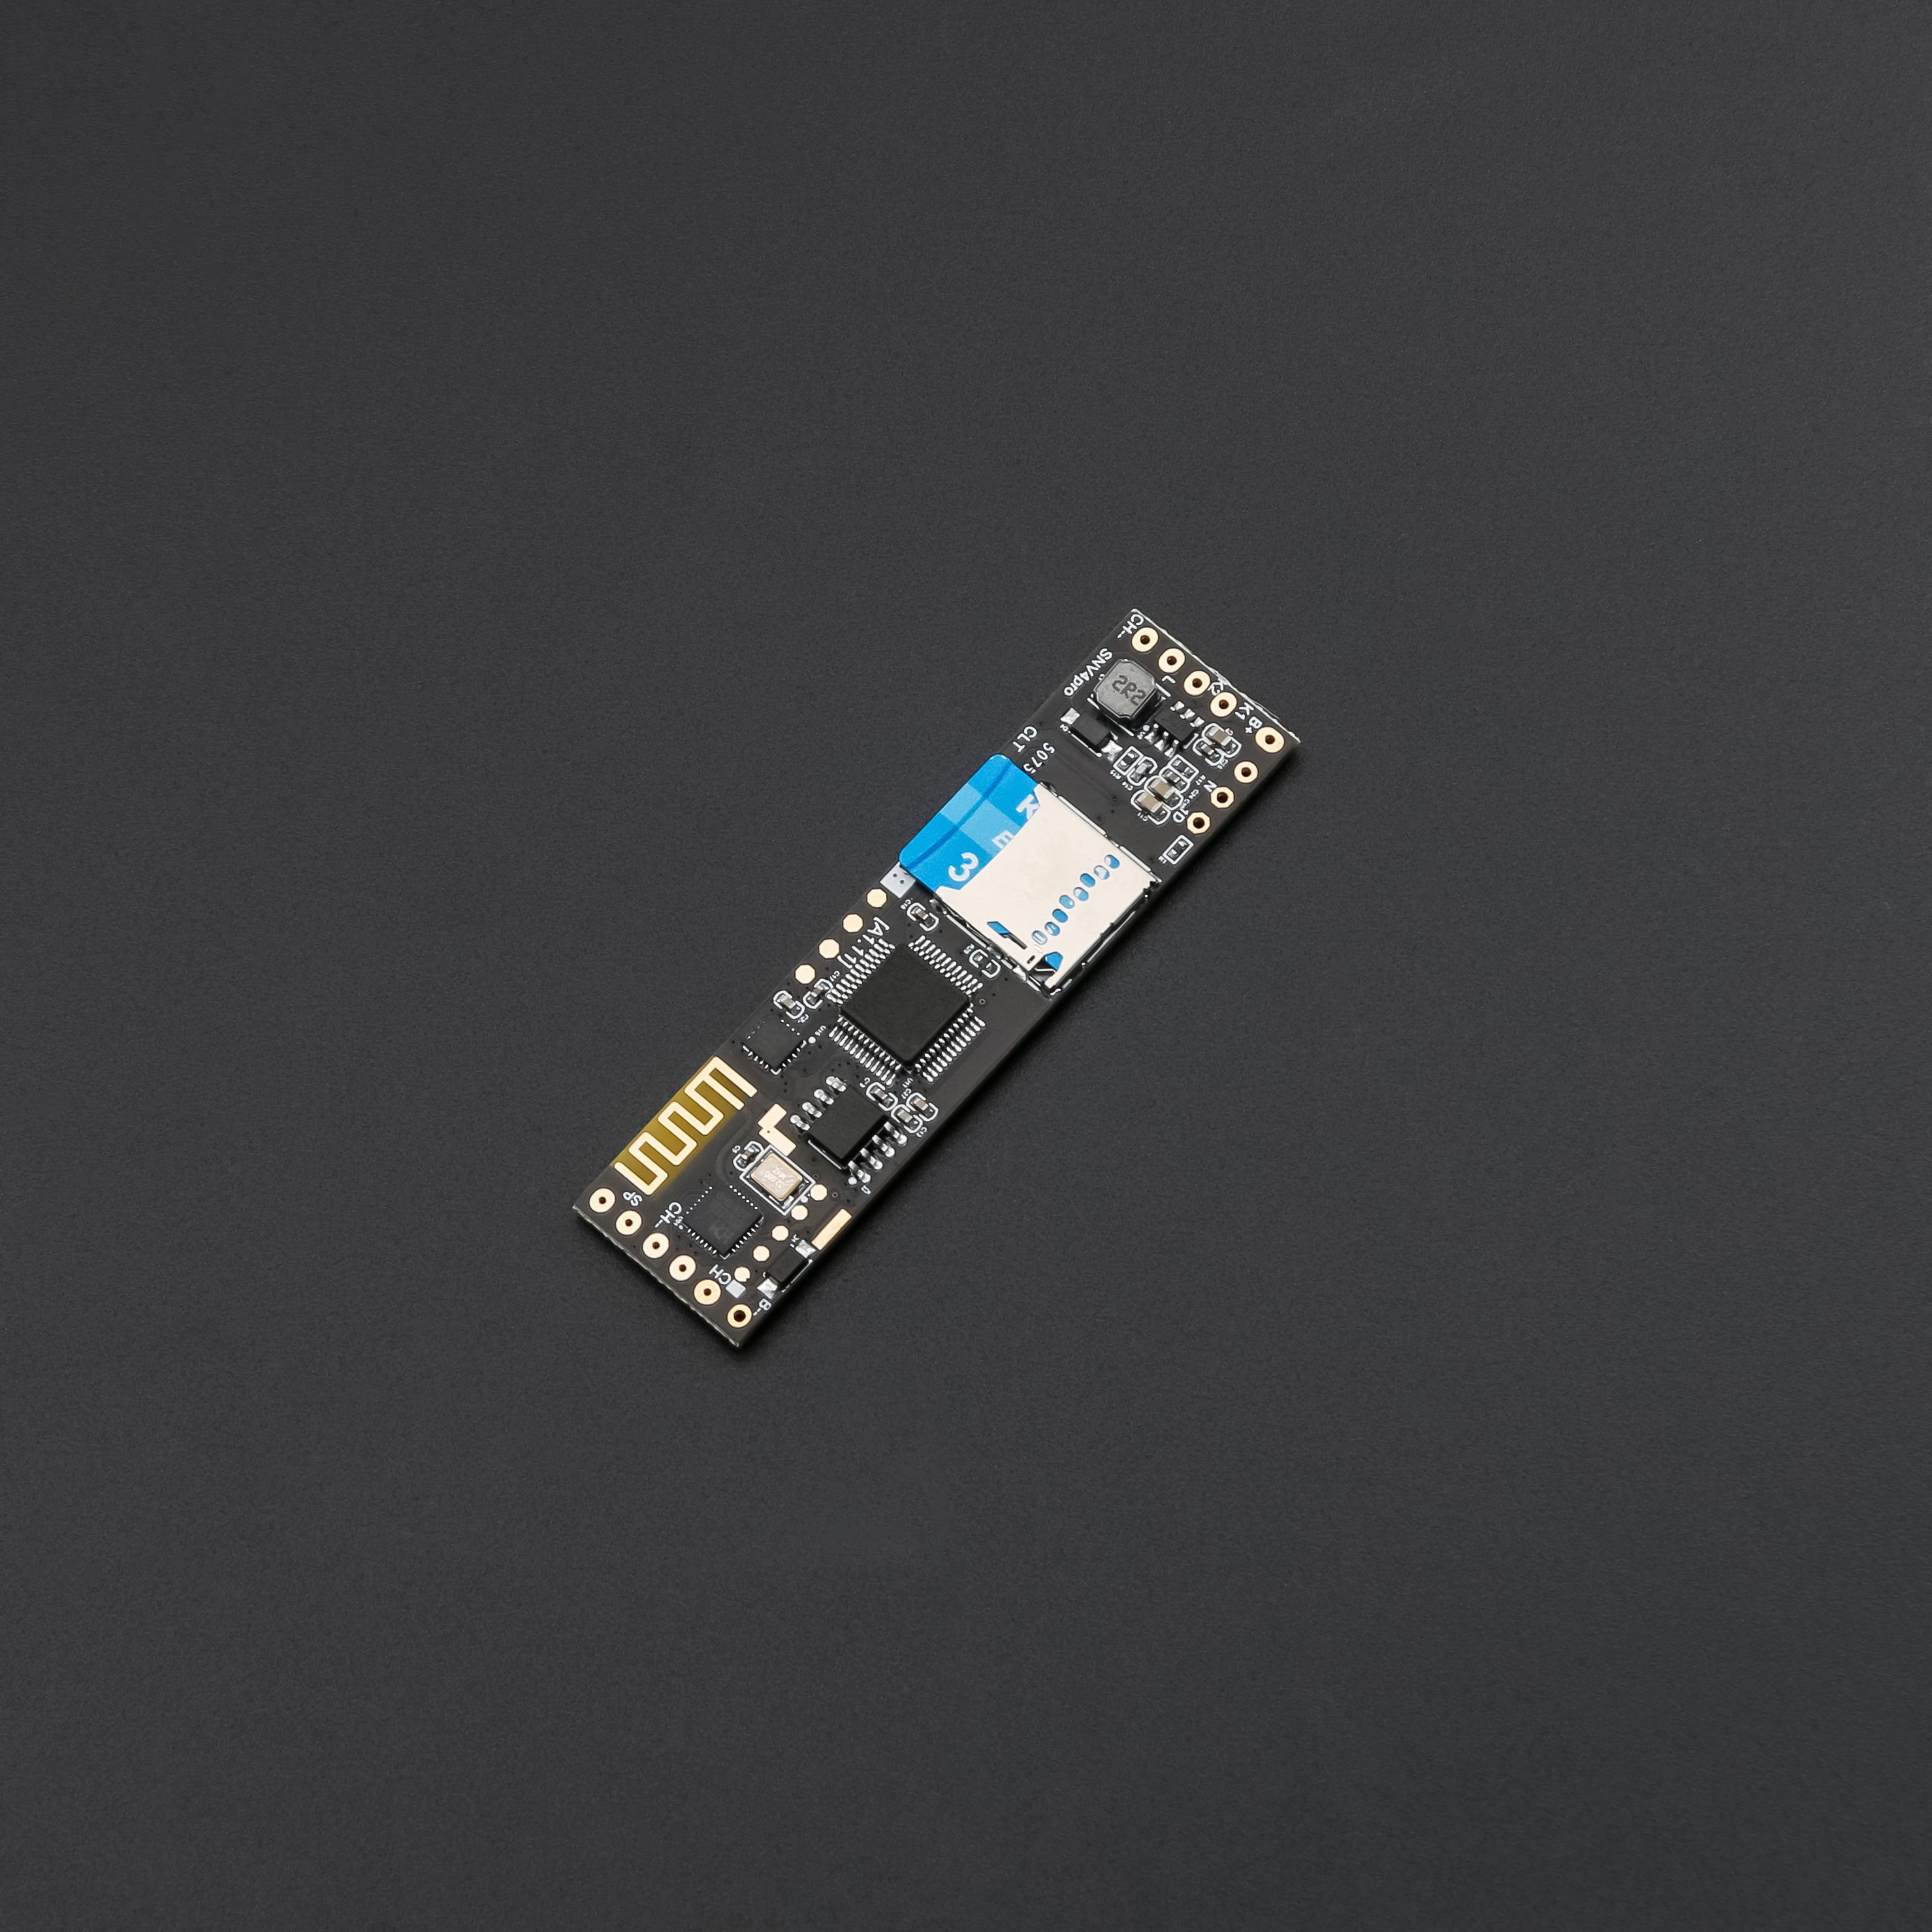 SNV4 Pro chip